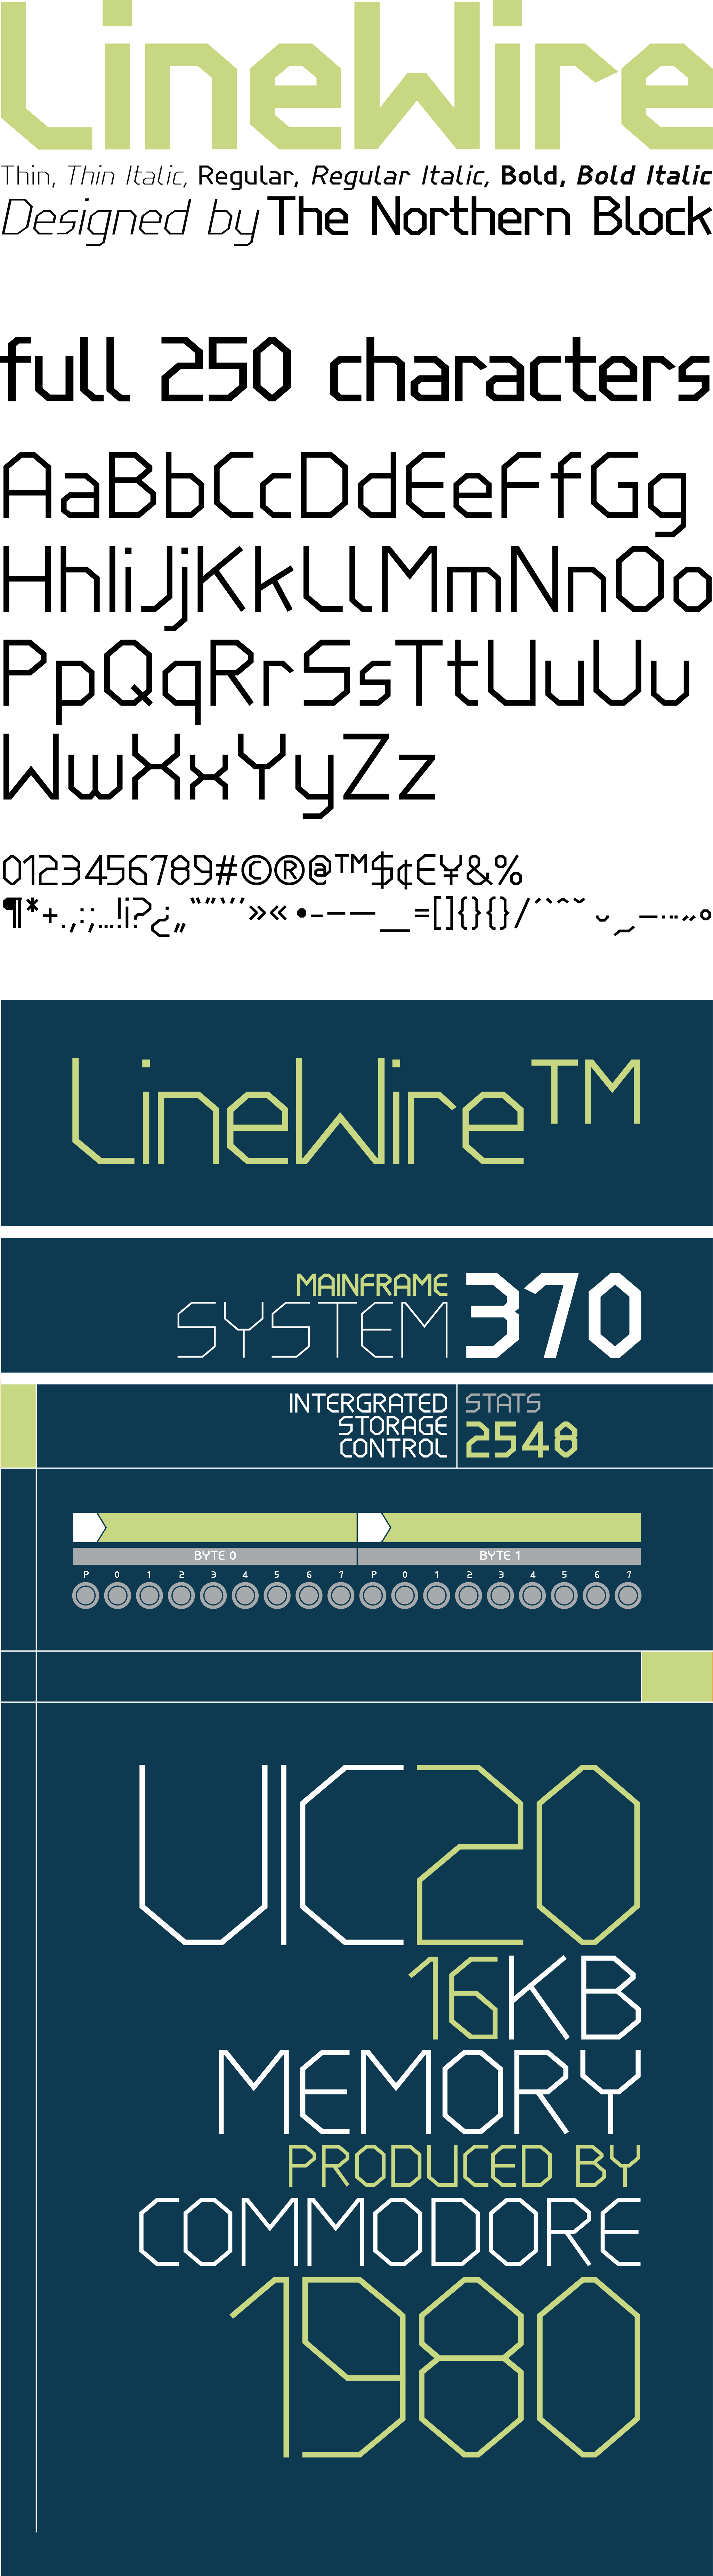 Linewire-billboard